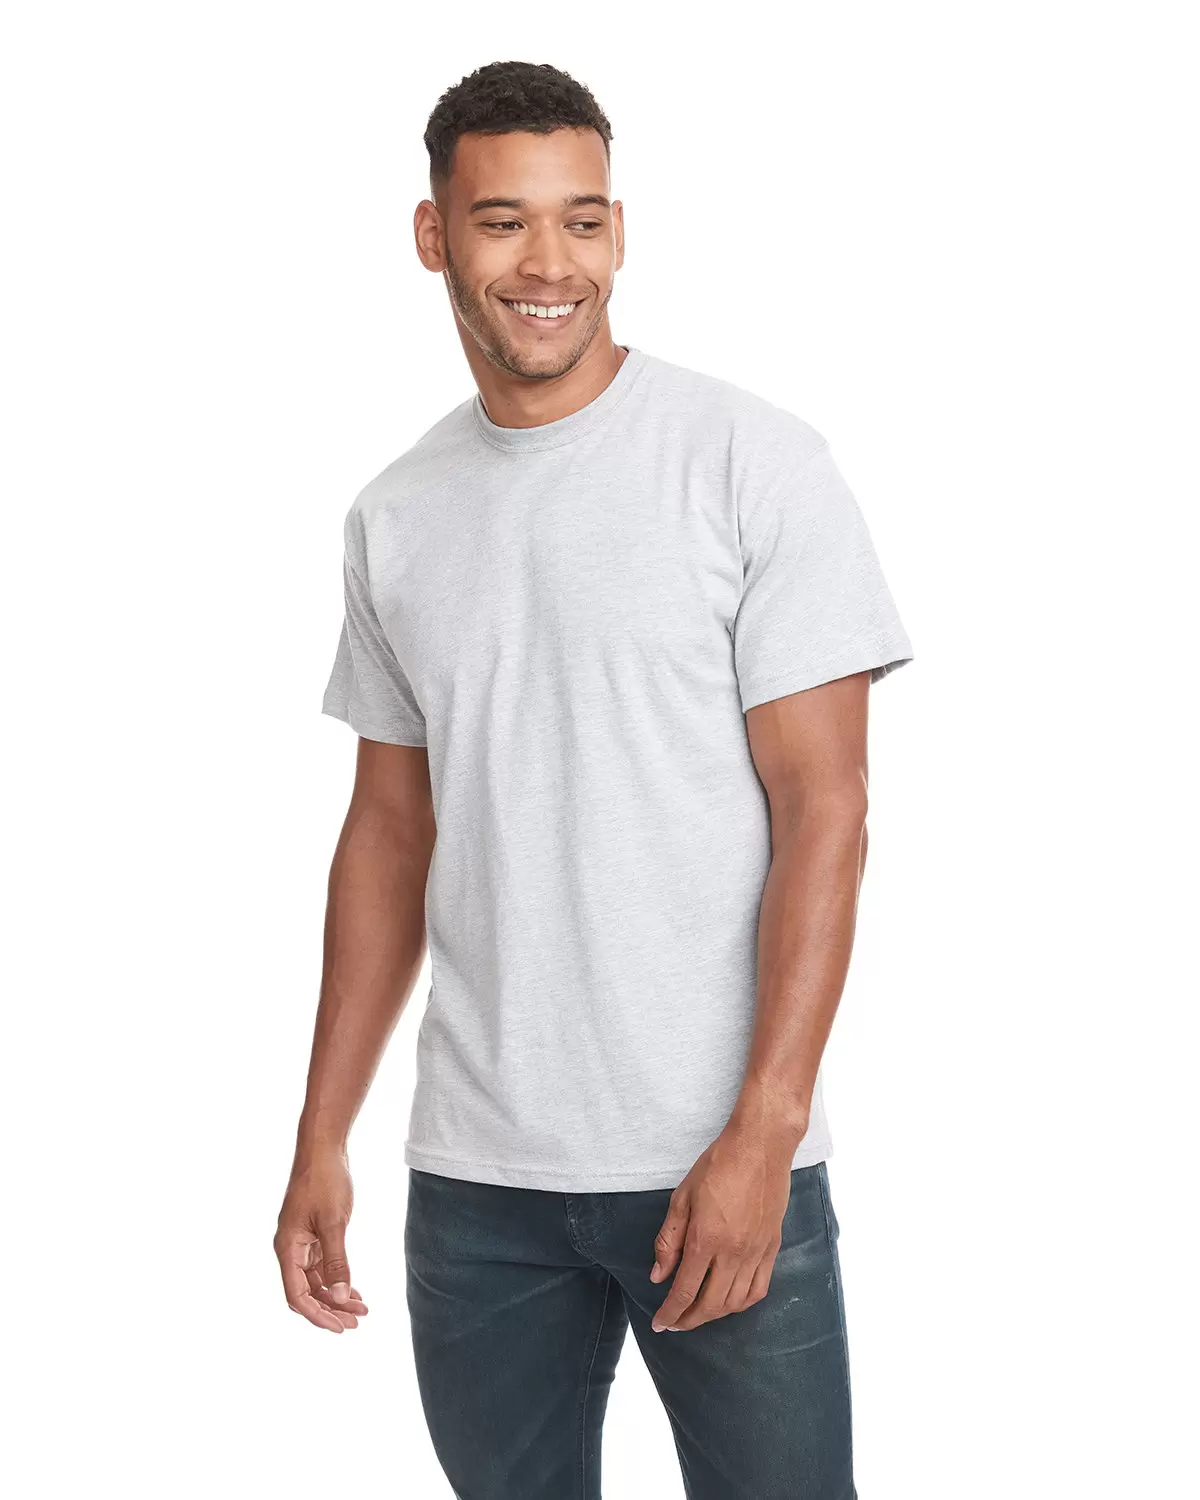 Wholesale Long Sleeve Hoodie, Custom Sweatshirts, Unisex Wholesale  Clothing